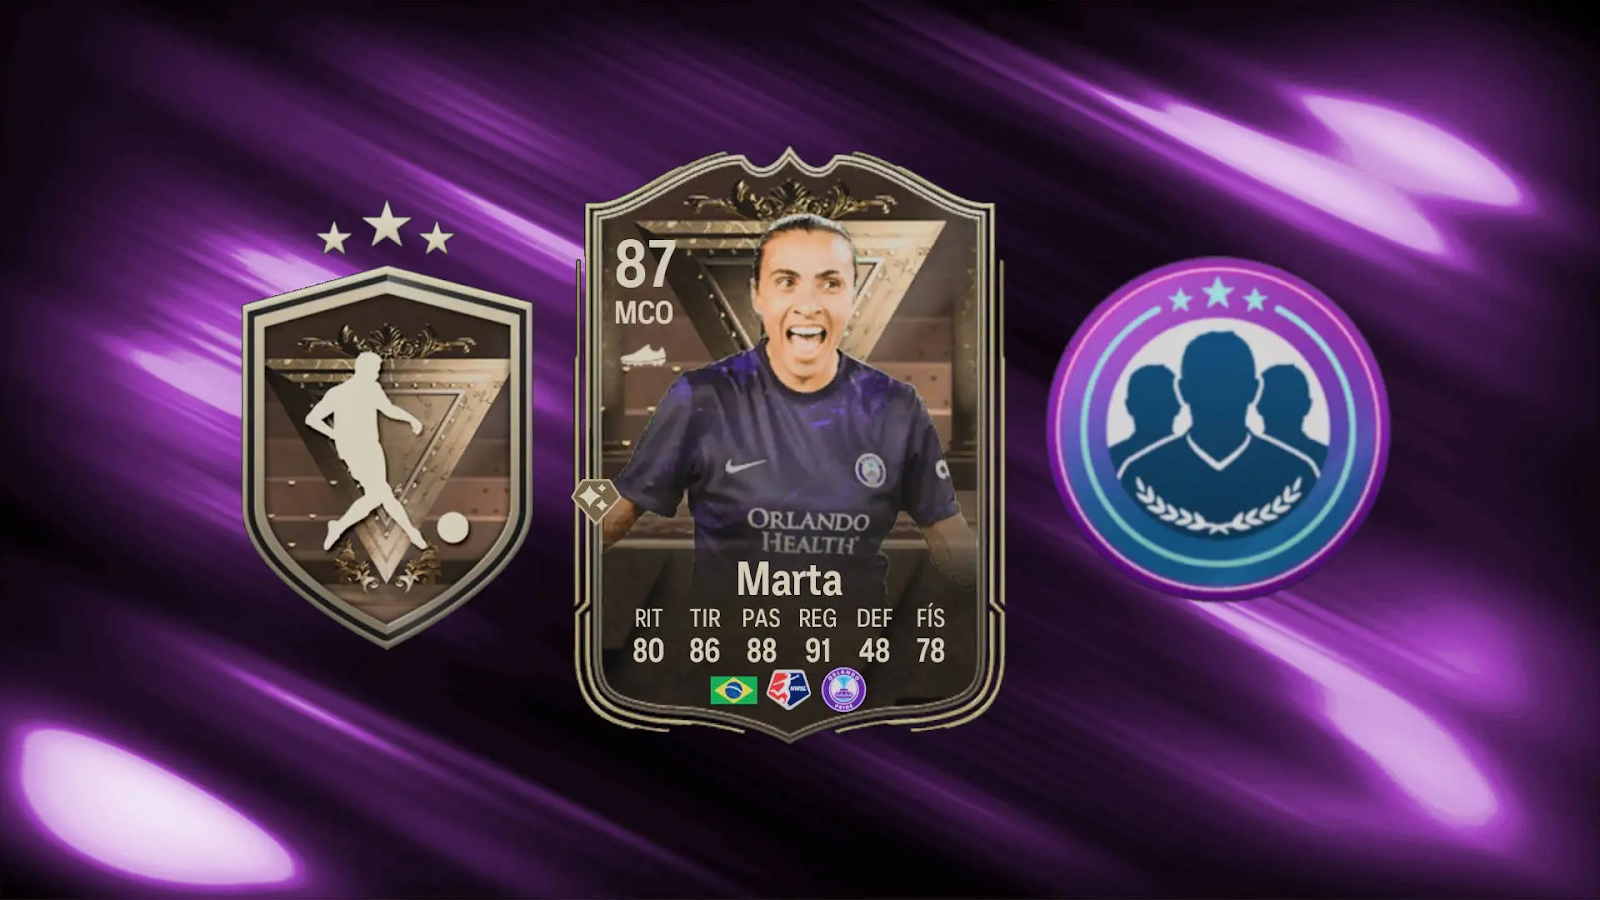 Marta fifa card details